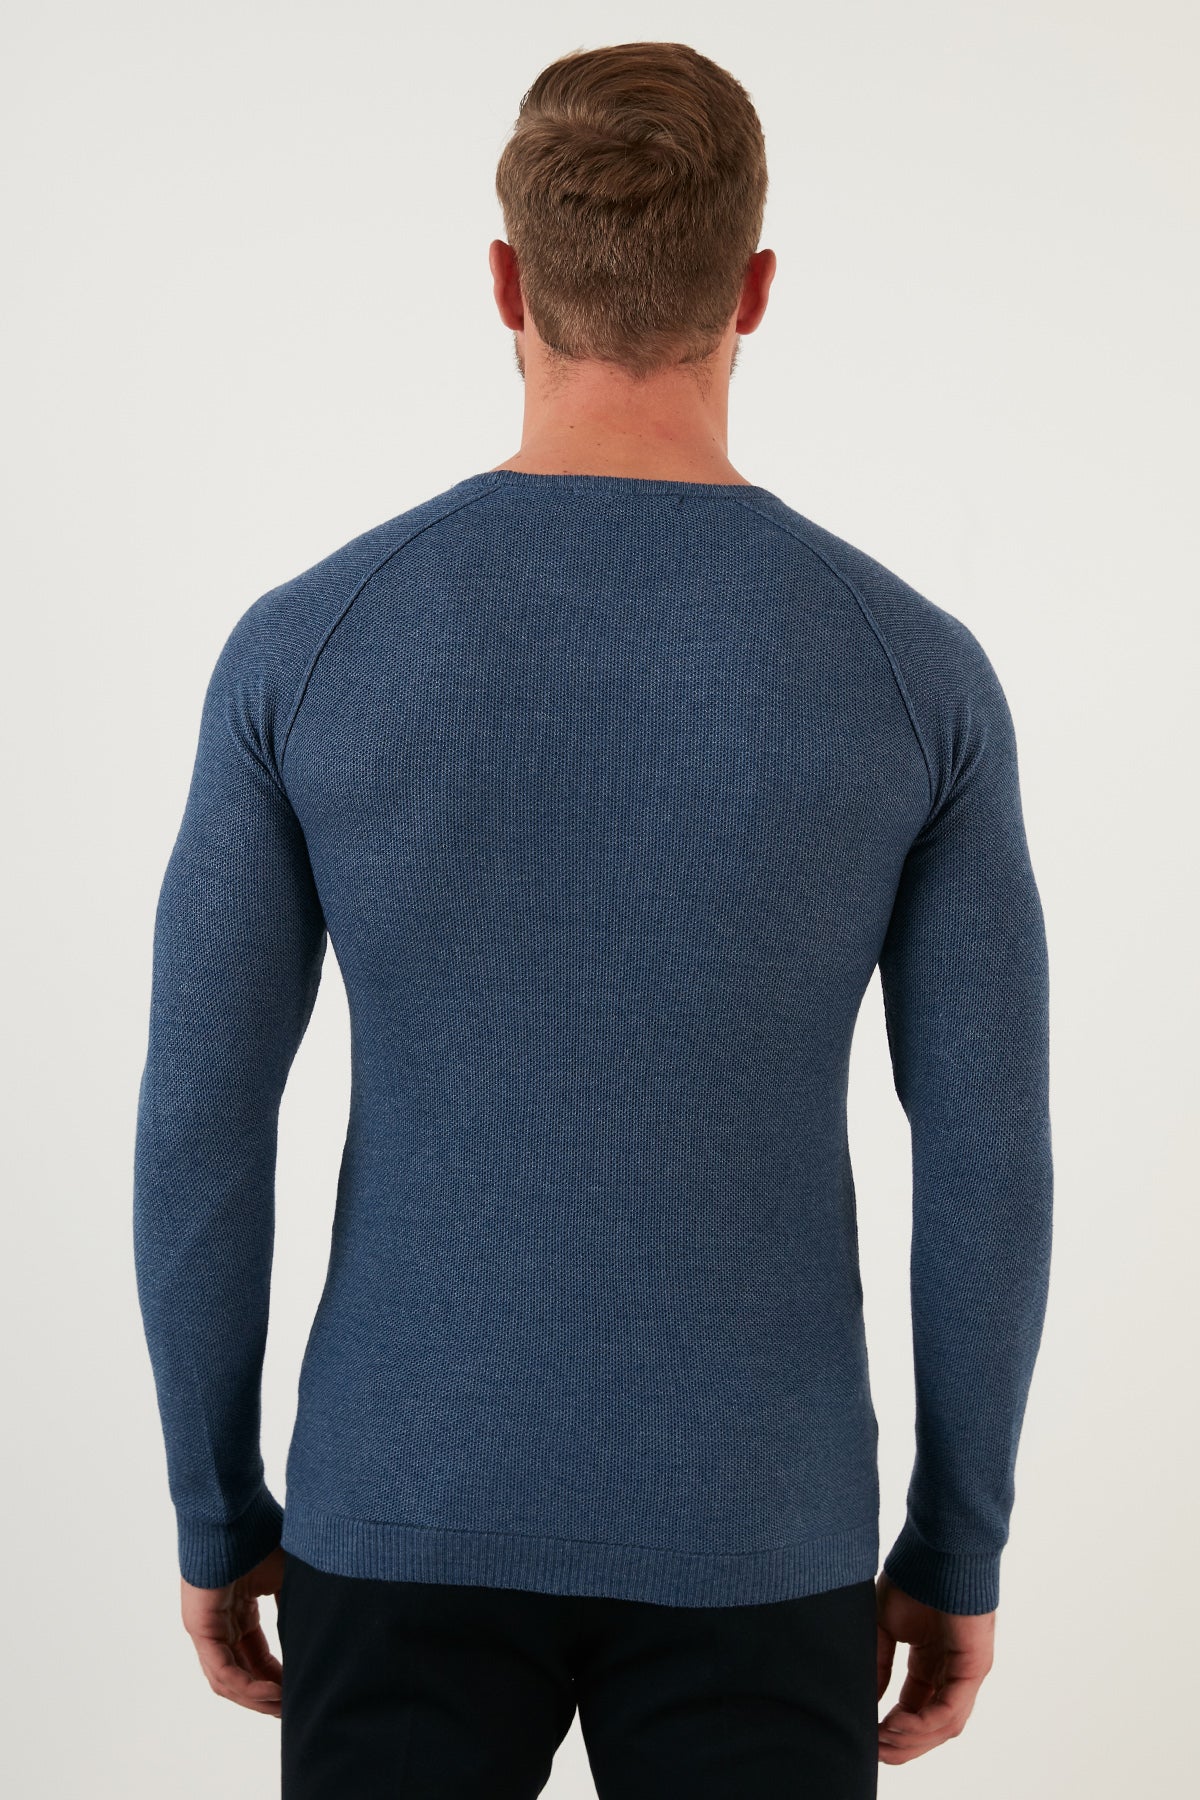 Buratti Slim Fit Crew Neck Cotton Knitwear Men's Sweater - ANTHRACITE